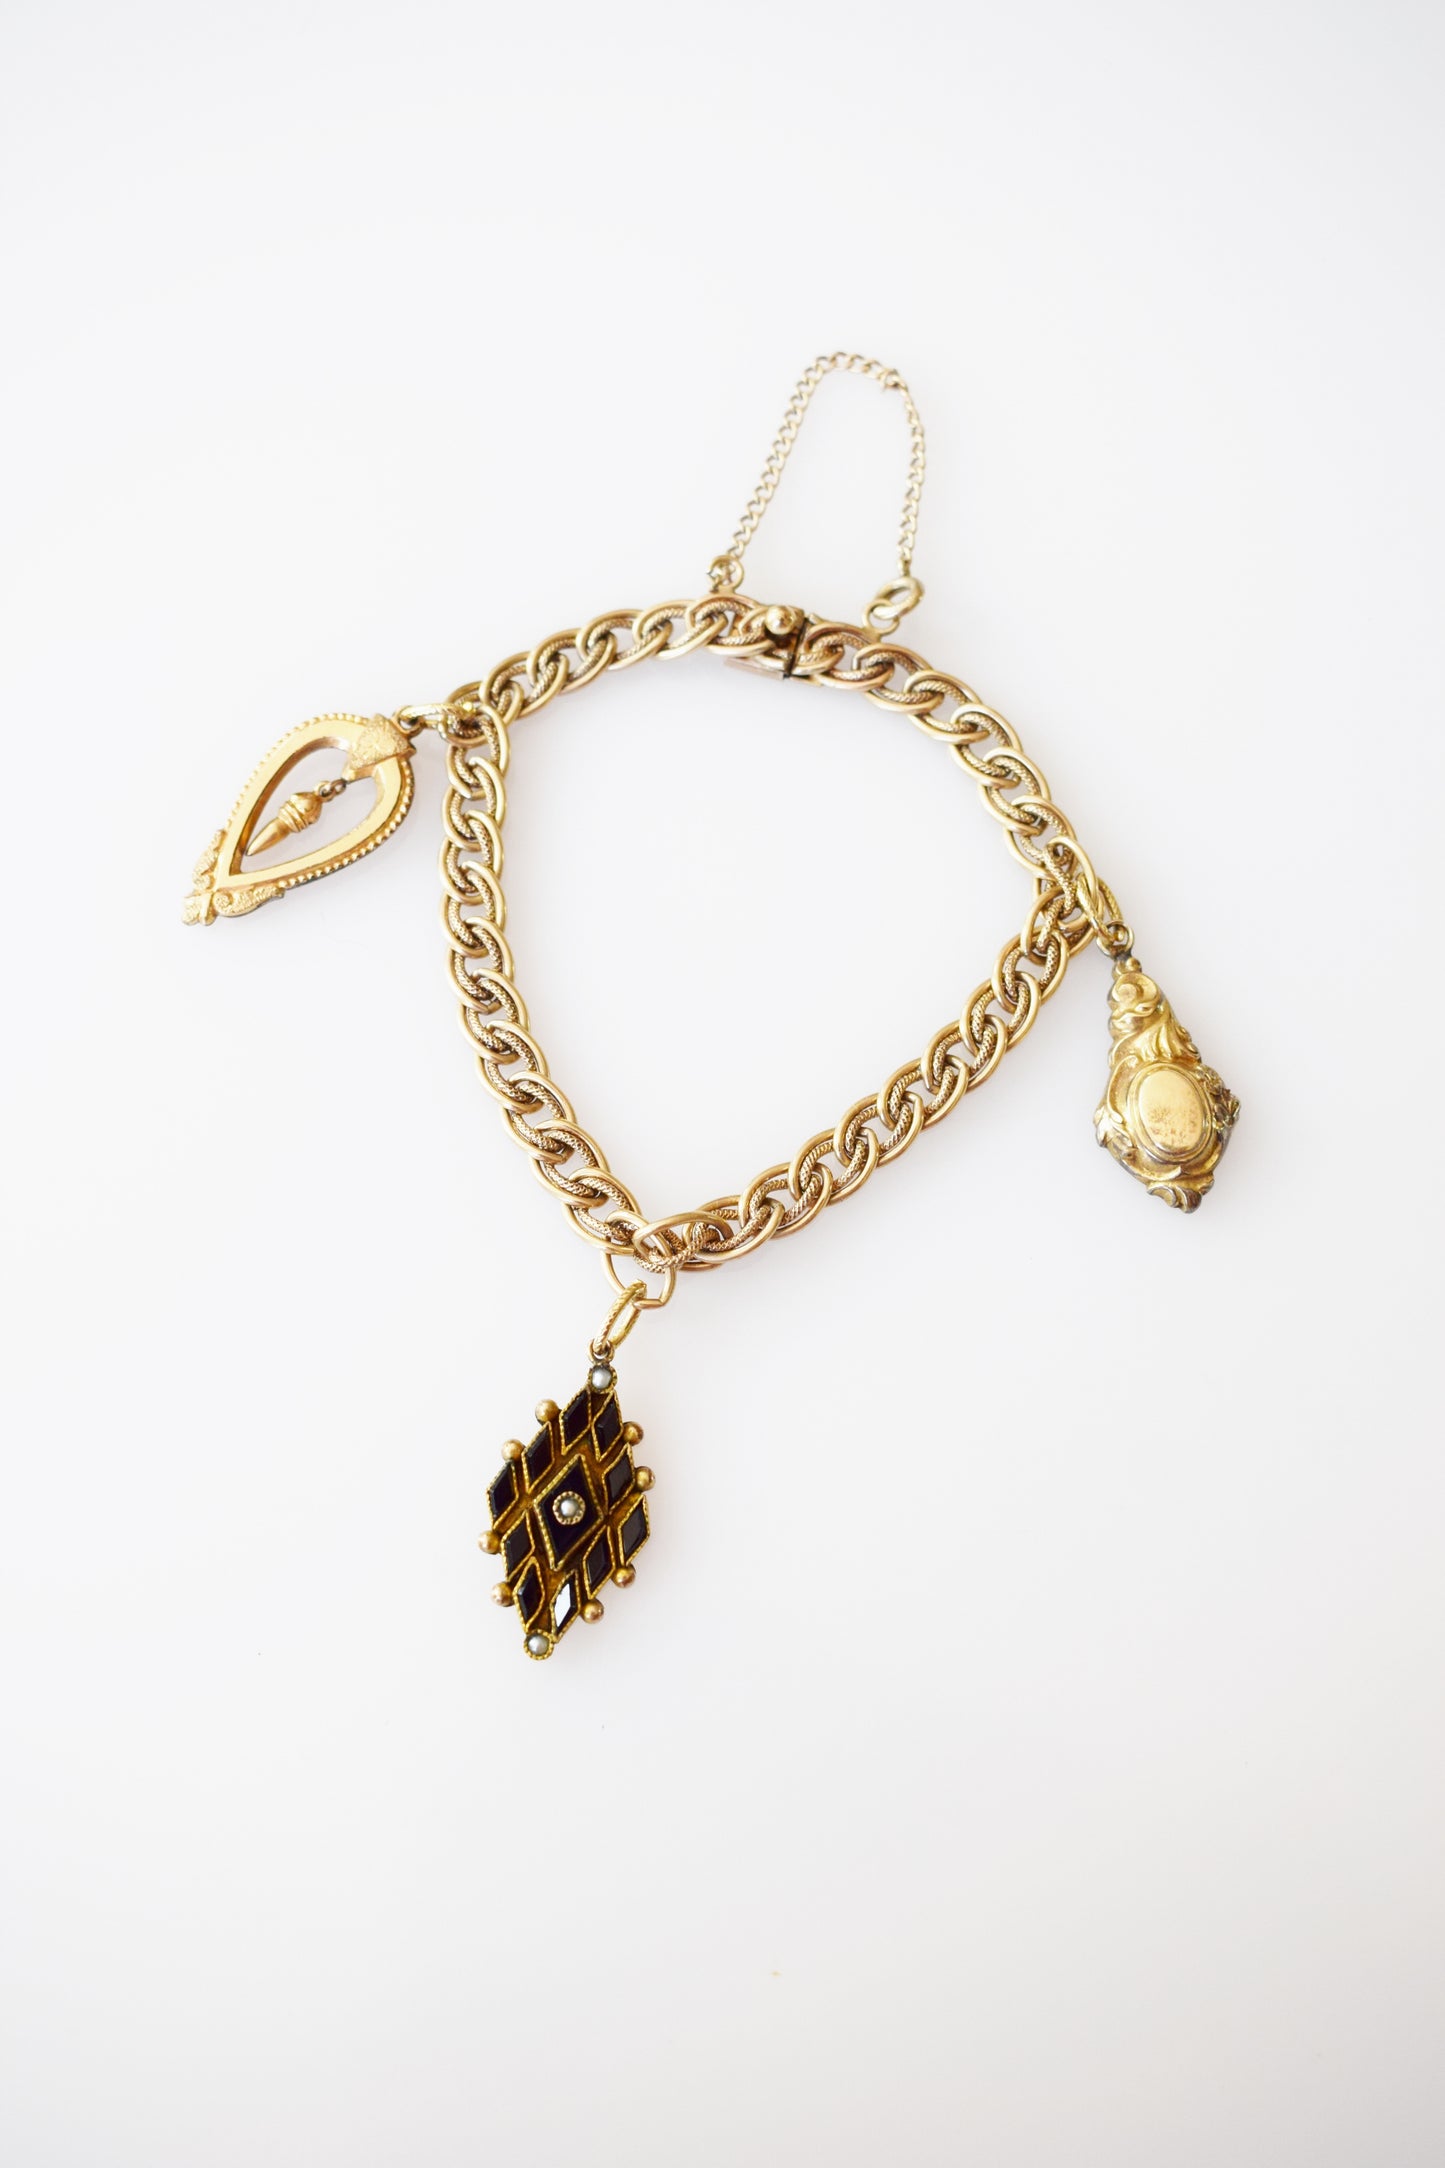 Vintage Gold-fill Curb Link Charm Bracelet by Winard